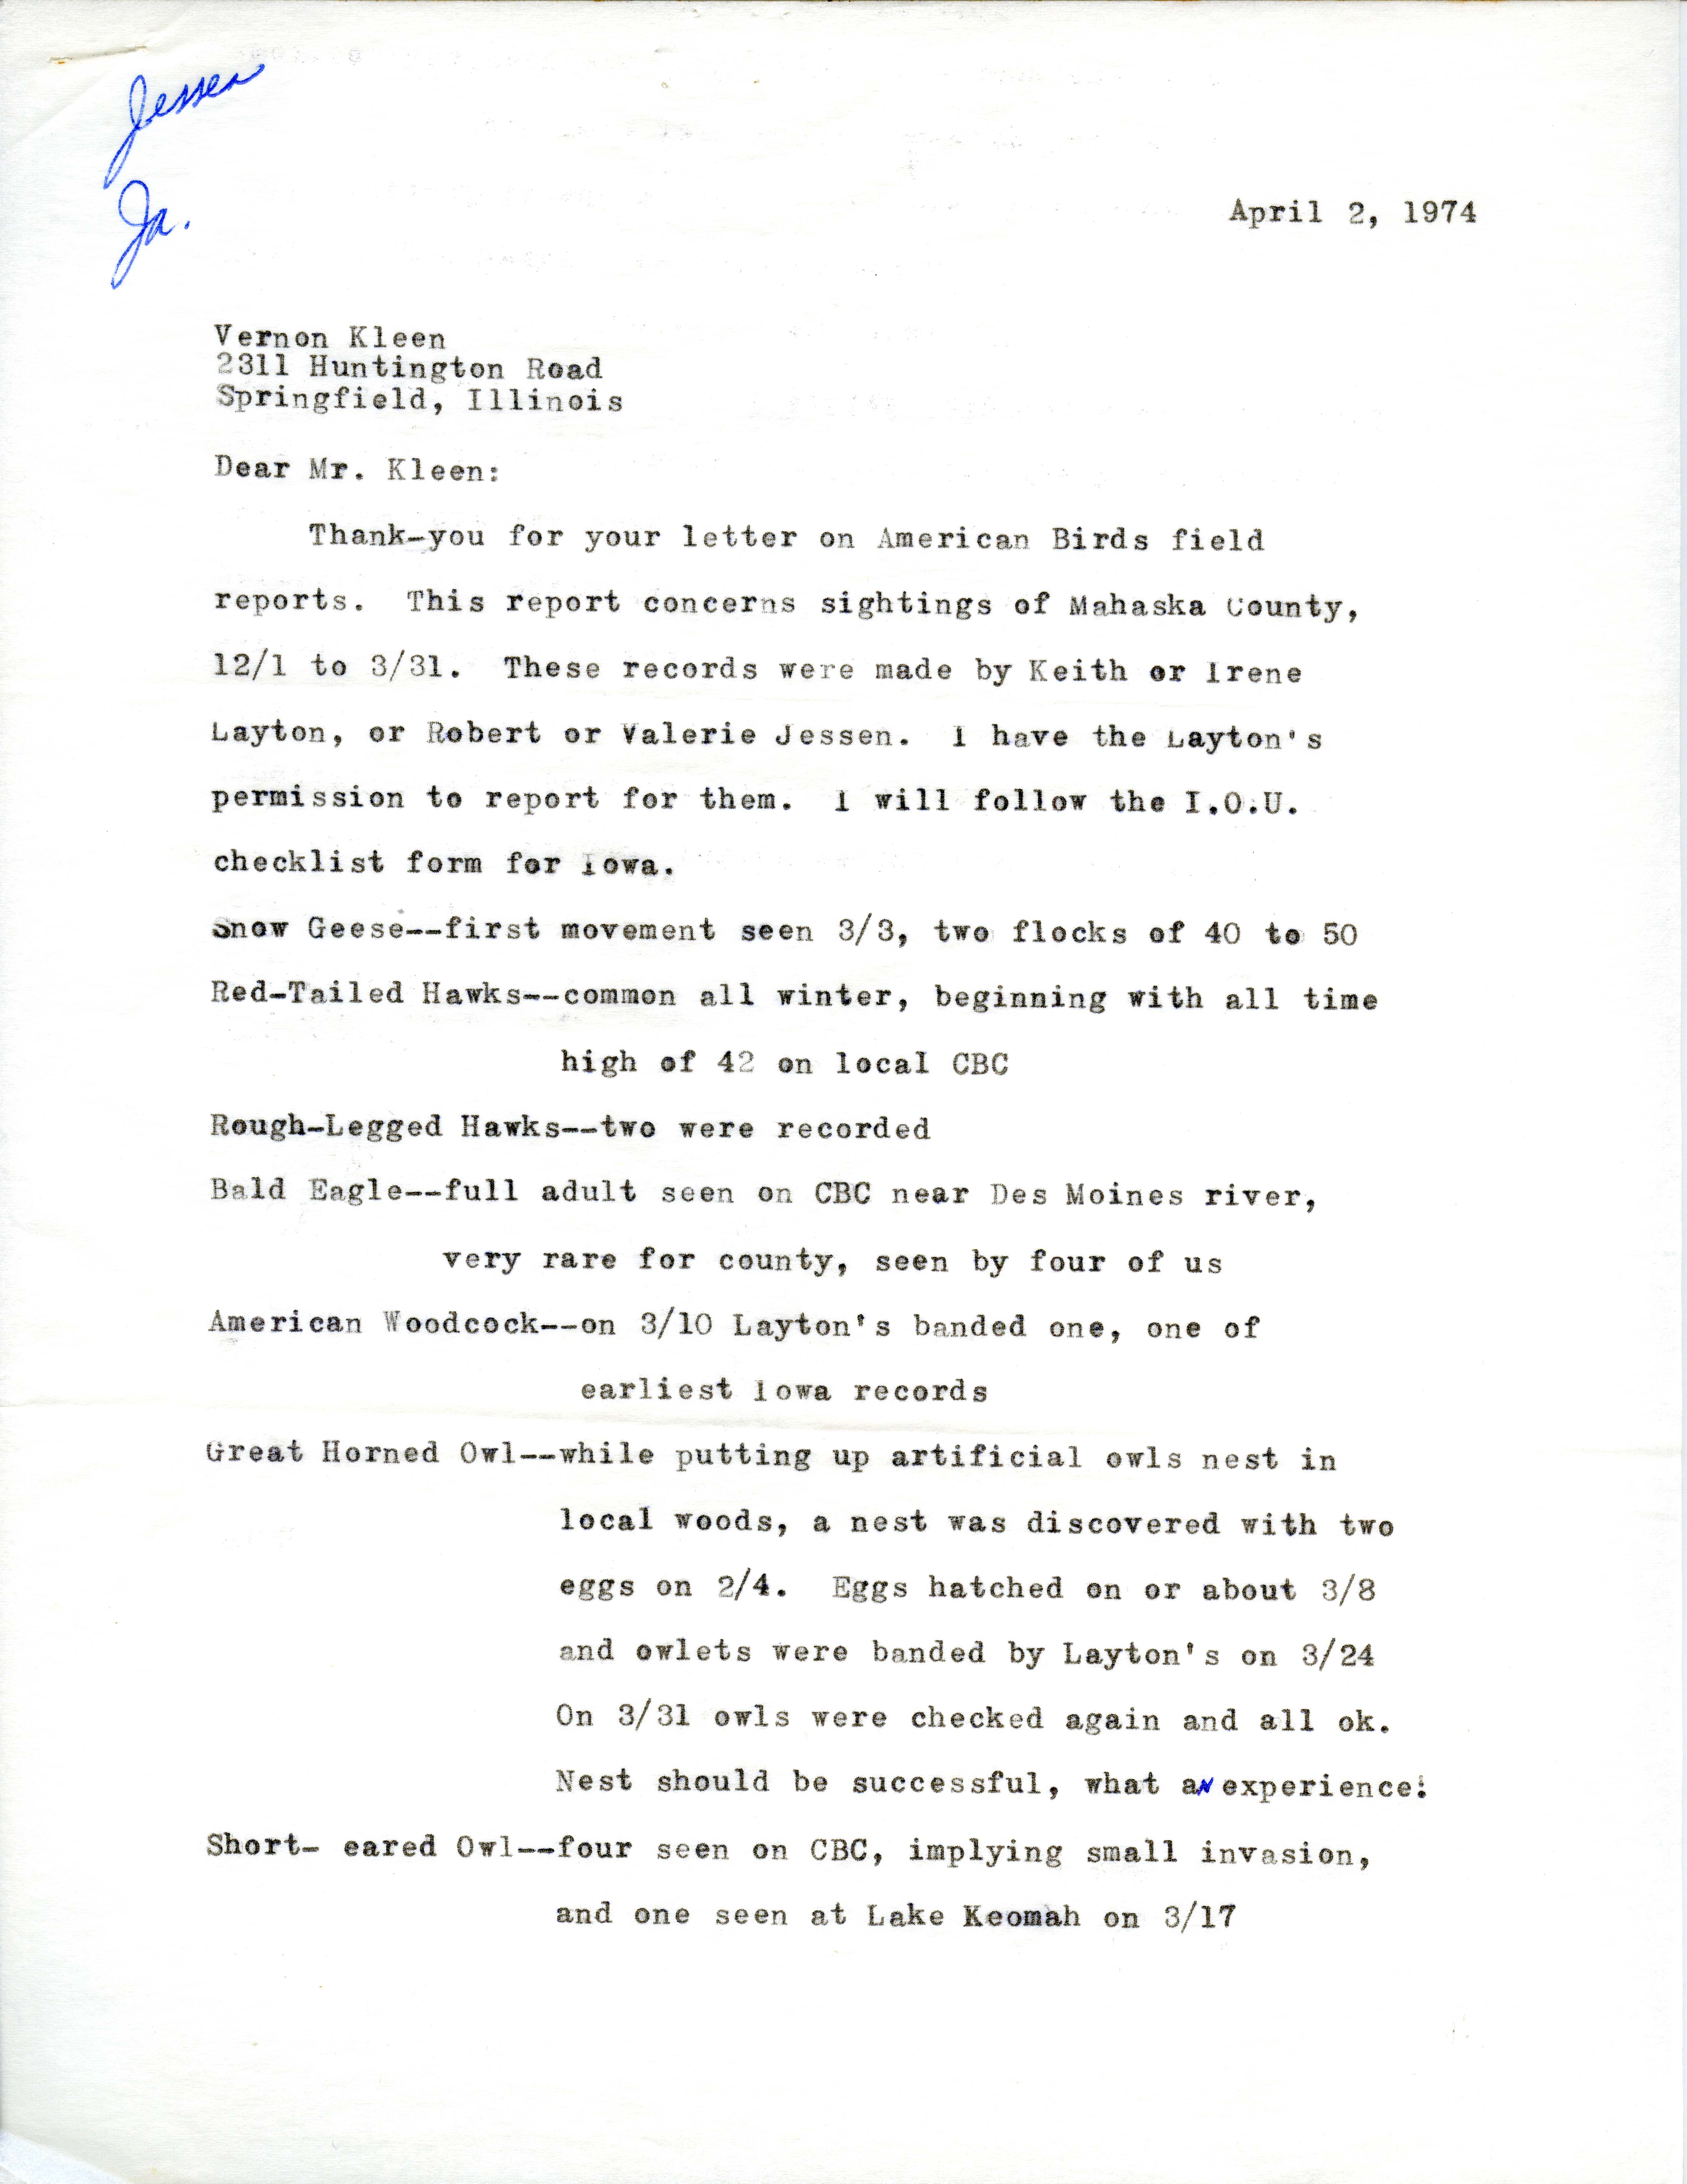 Robert Jessen letter to Vernon M. Kleen regarding birds sighted in Mahaska County during winter, April 2, 1974